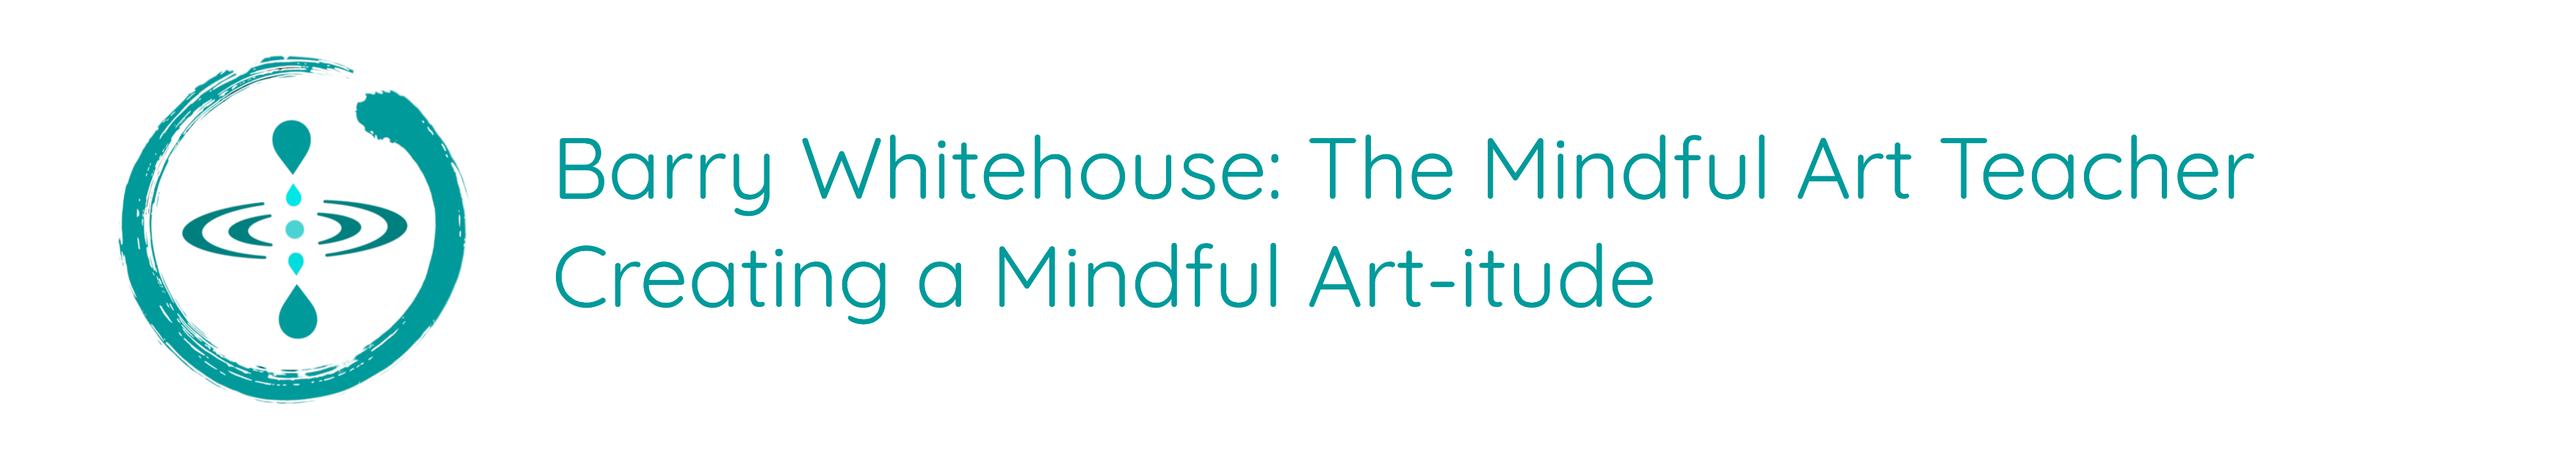 Barry Whitehouse: The Mindful Art Teacher